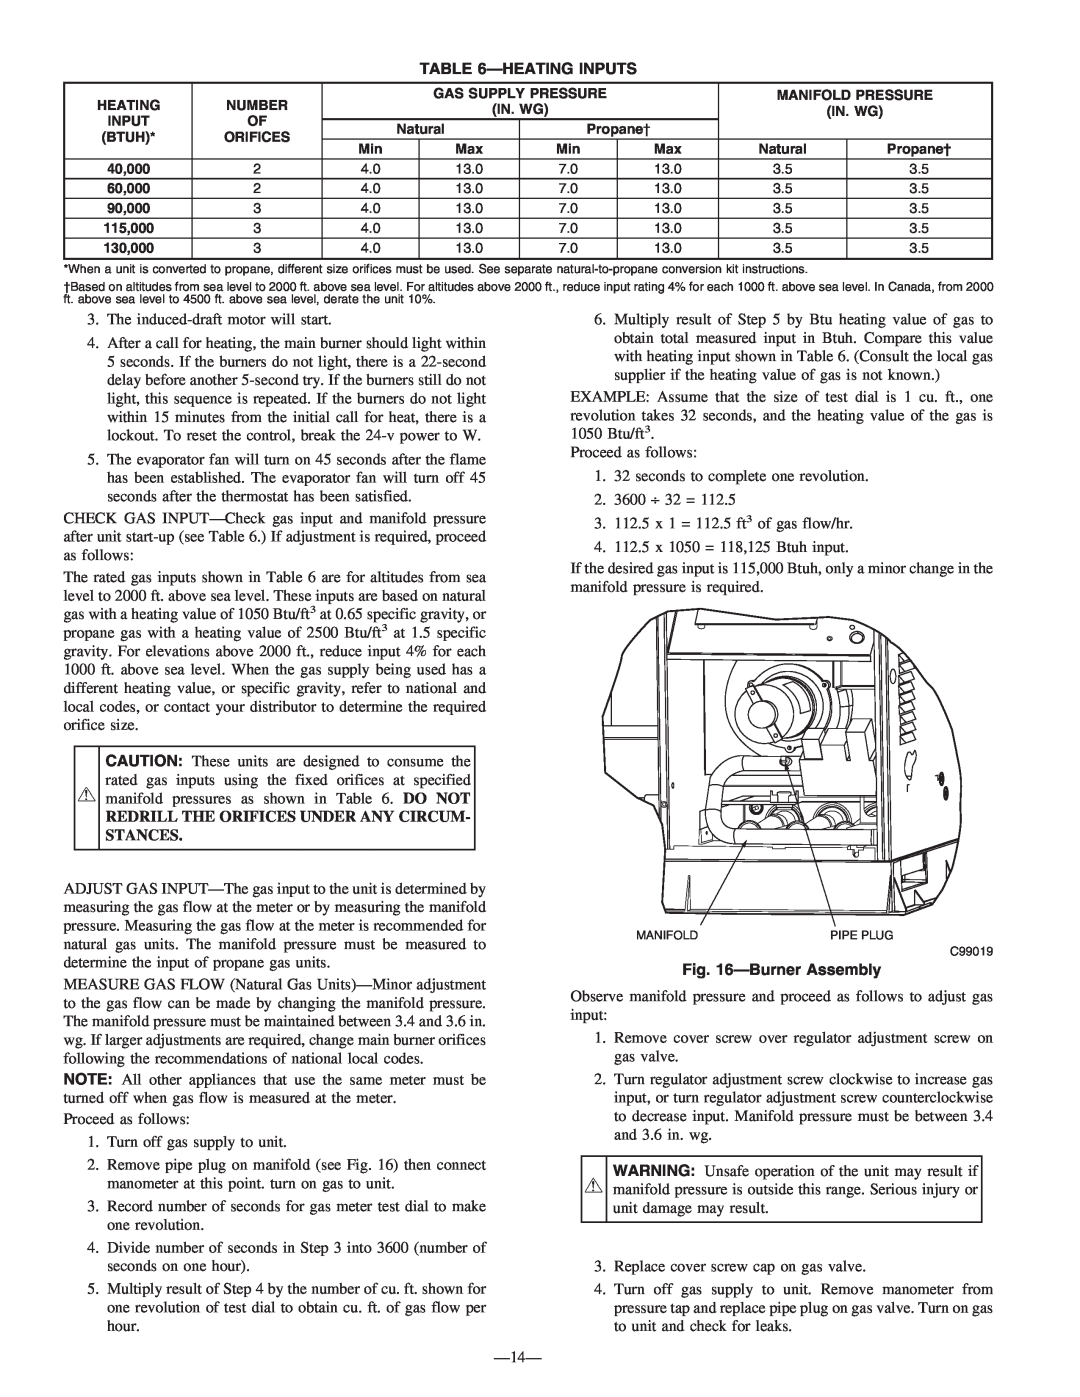 Bryant 583B instruction manual Heatinginputs, Redrill The Orifices Under Any Circum- Stances, BurnerAssembly 